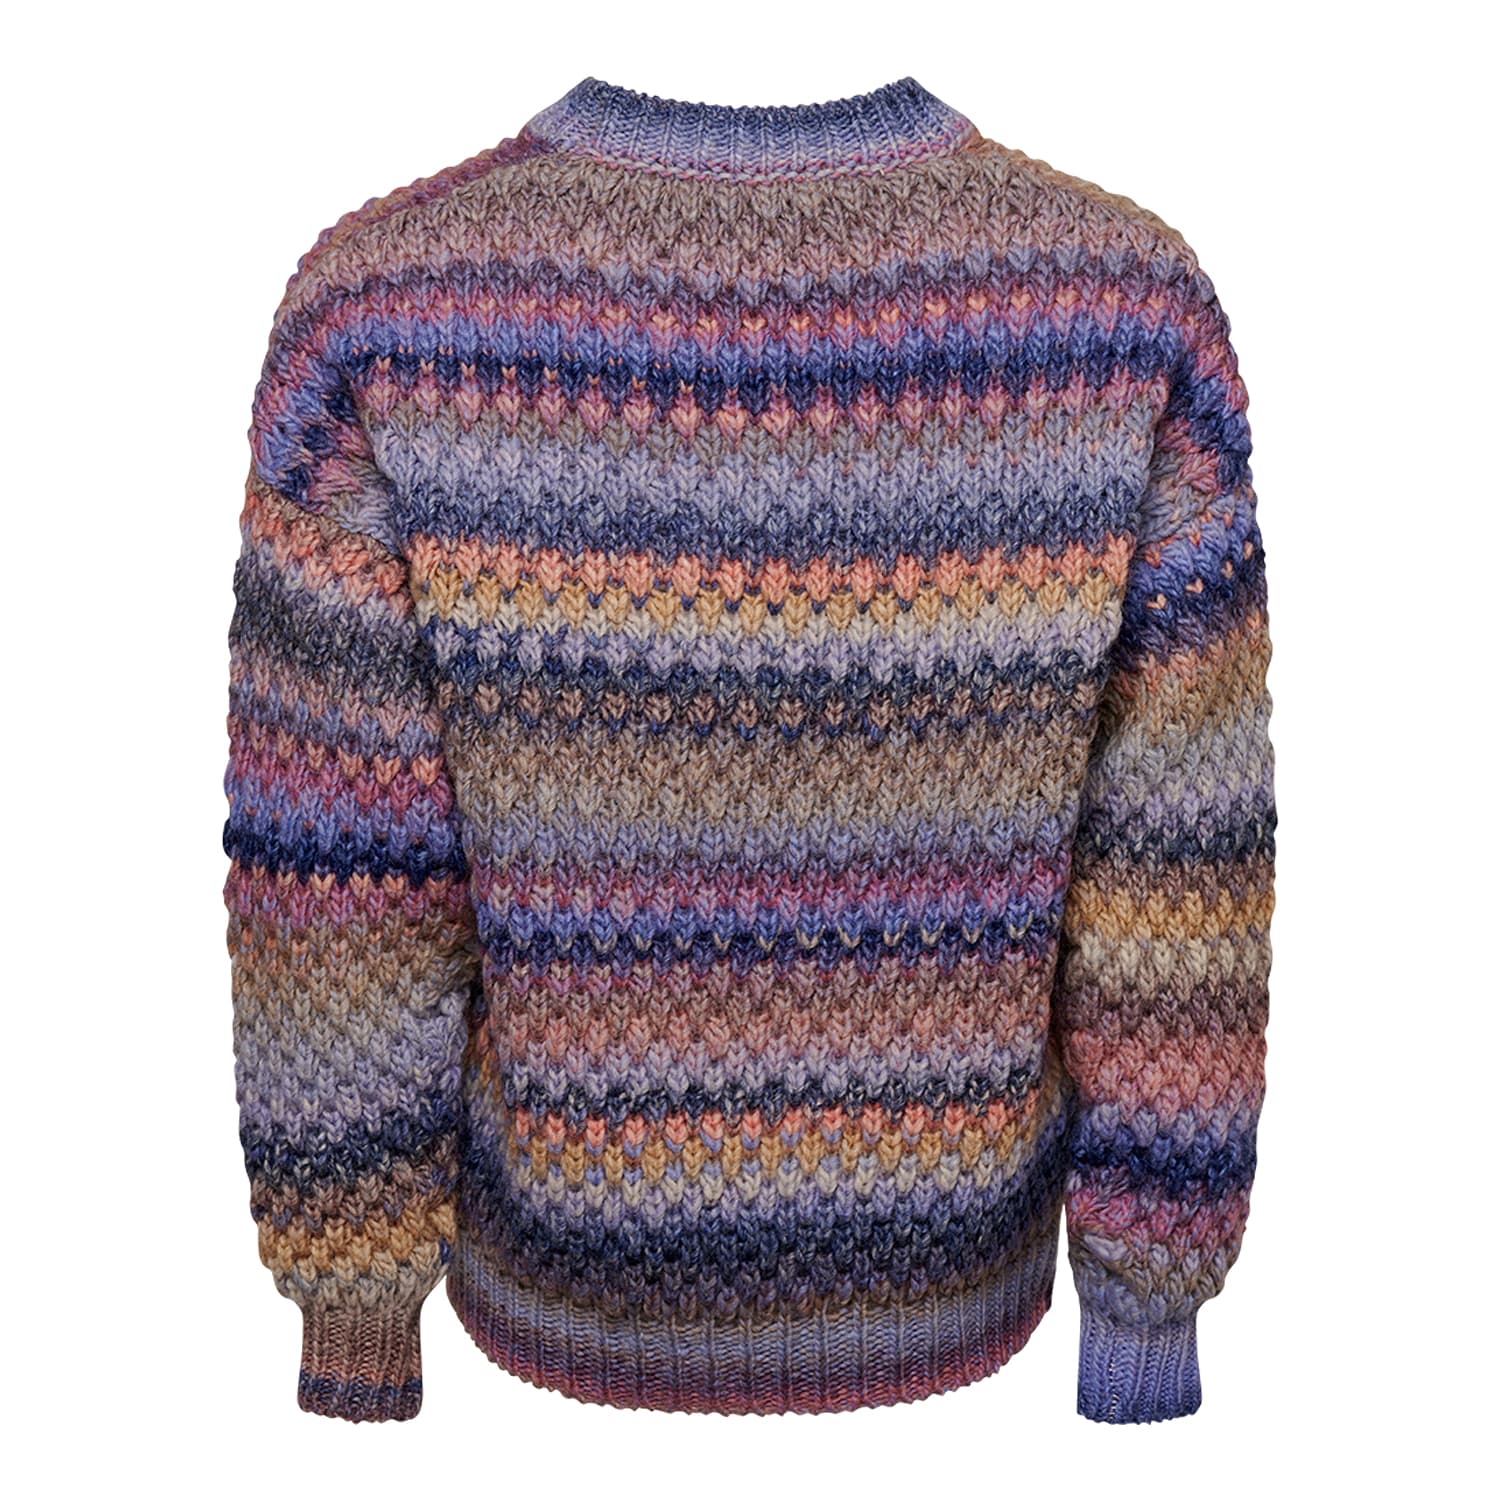 Gio Knit Sweater - Rainbow Mix